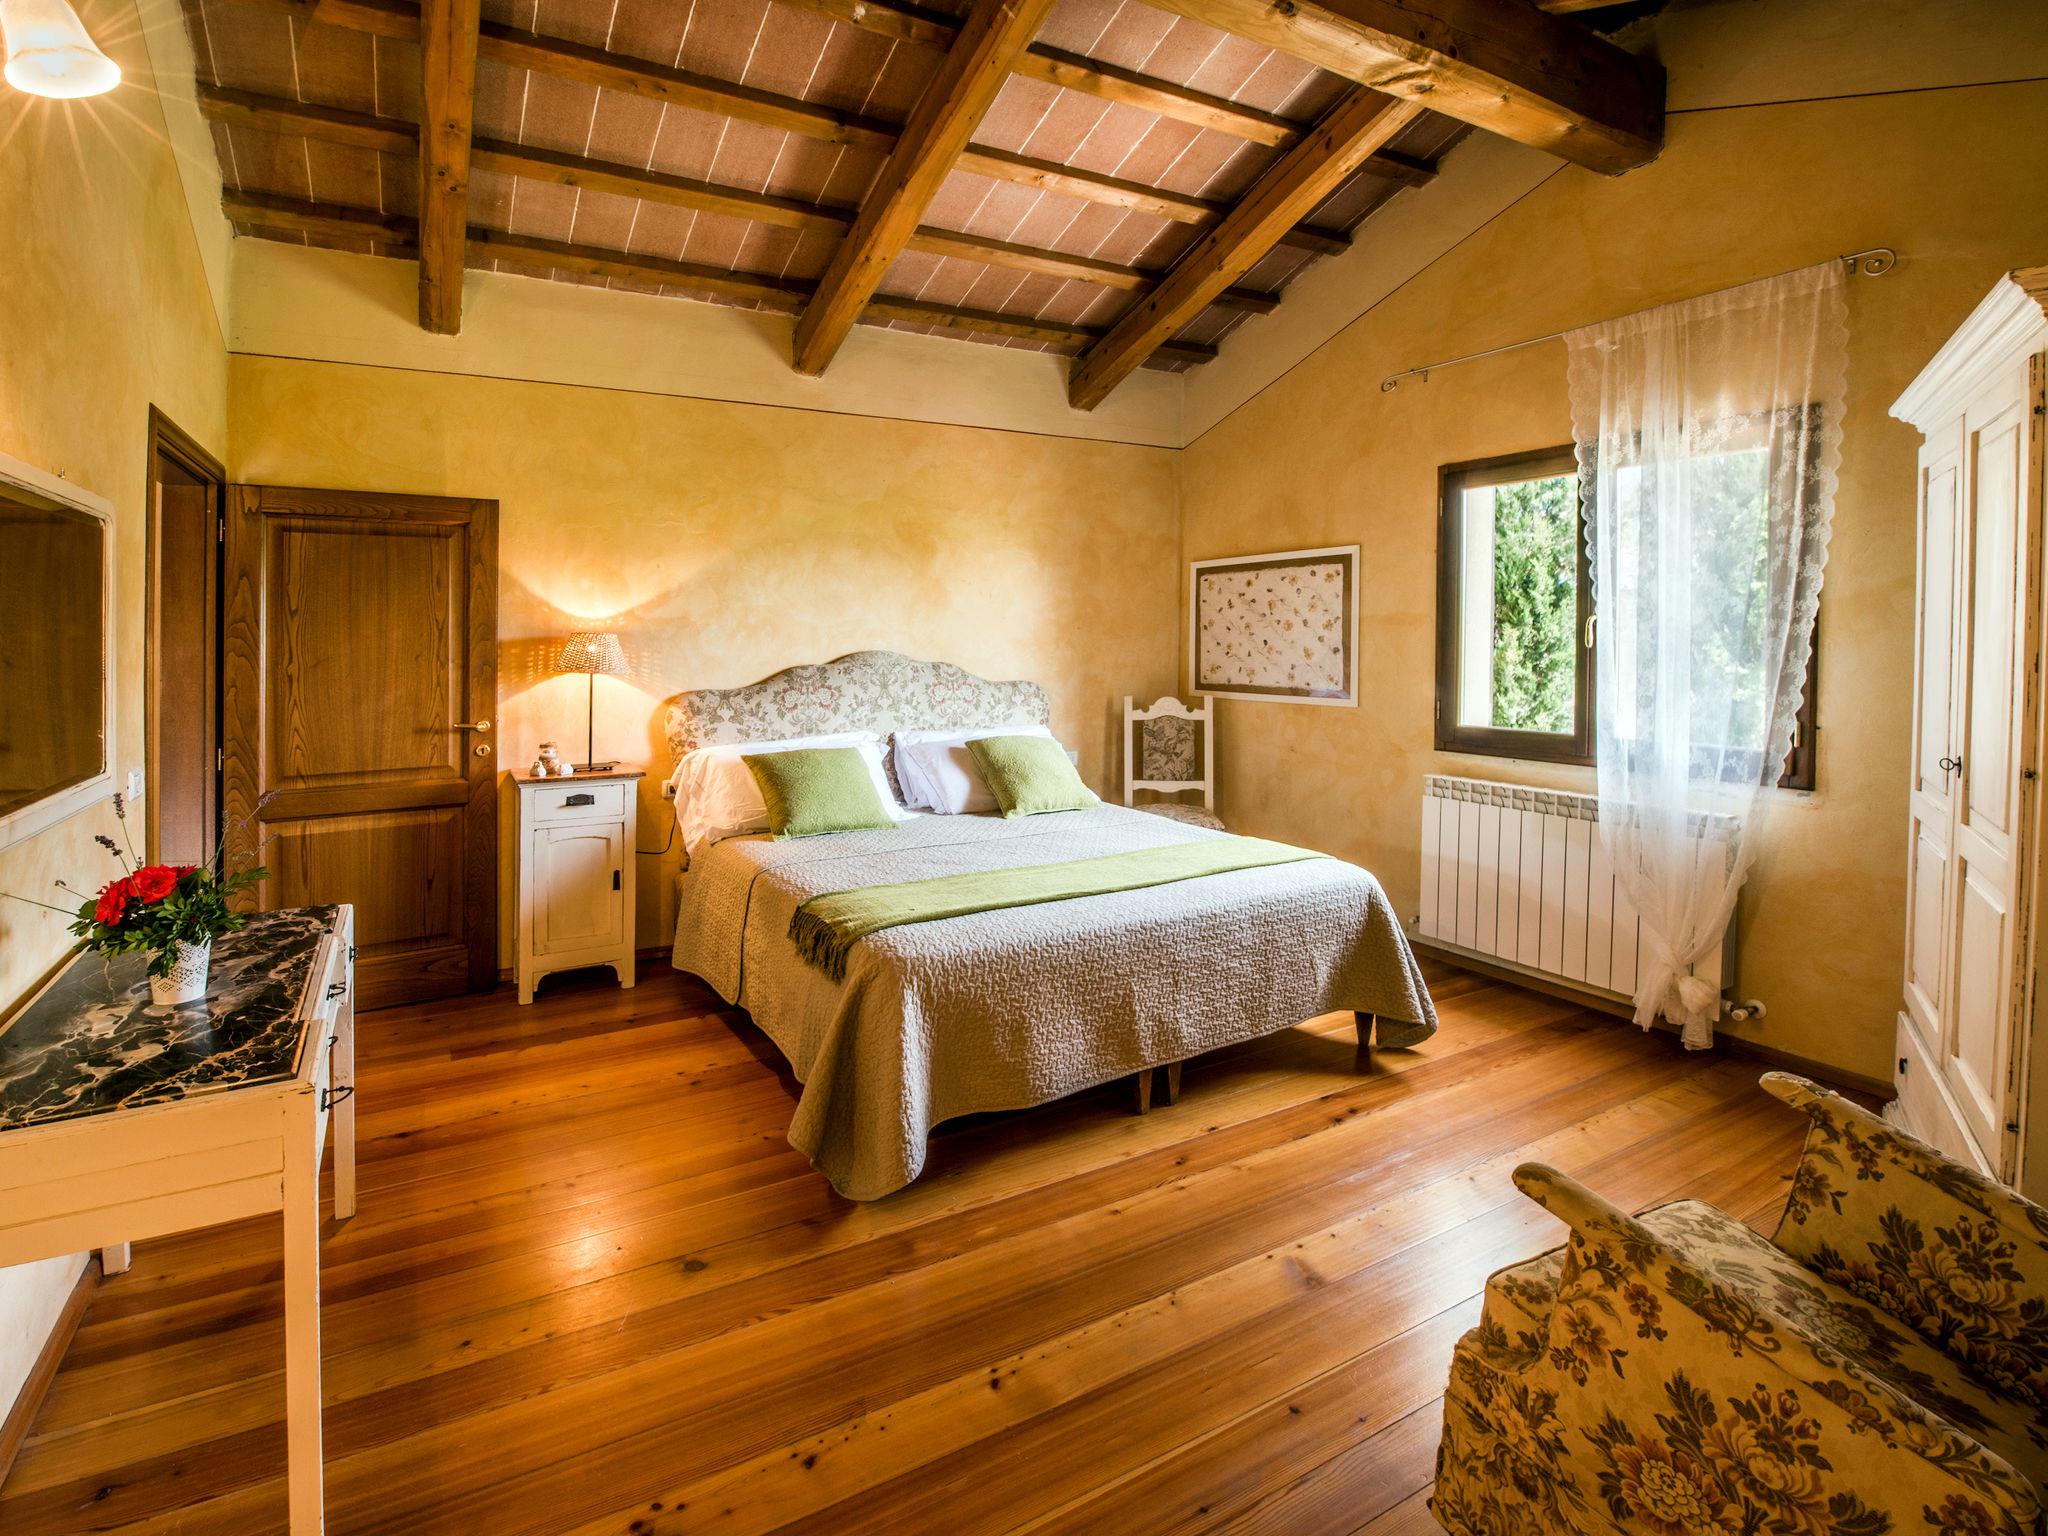 Photo 15 - 11 bedroom House in Terranuova Bracciolini with private pool and garden